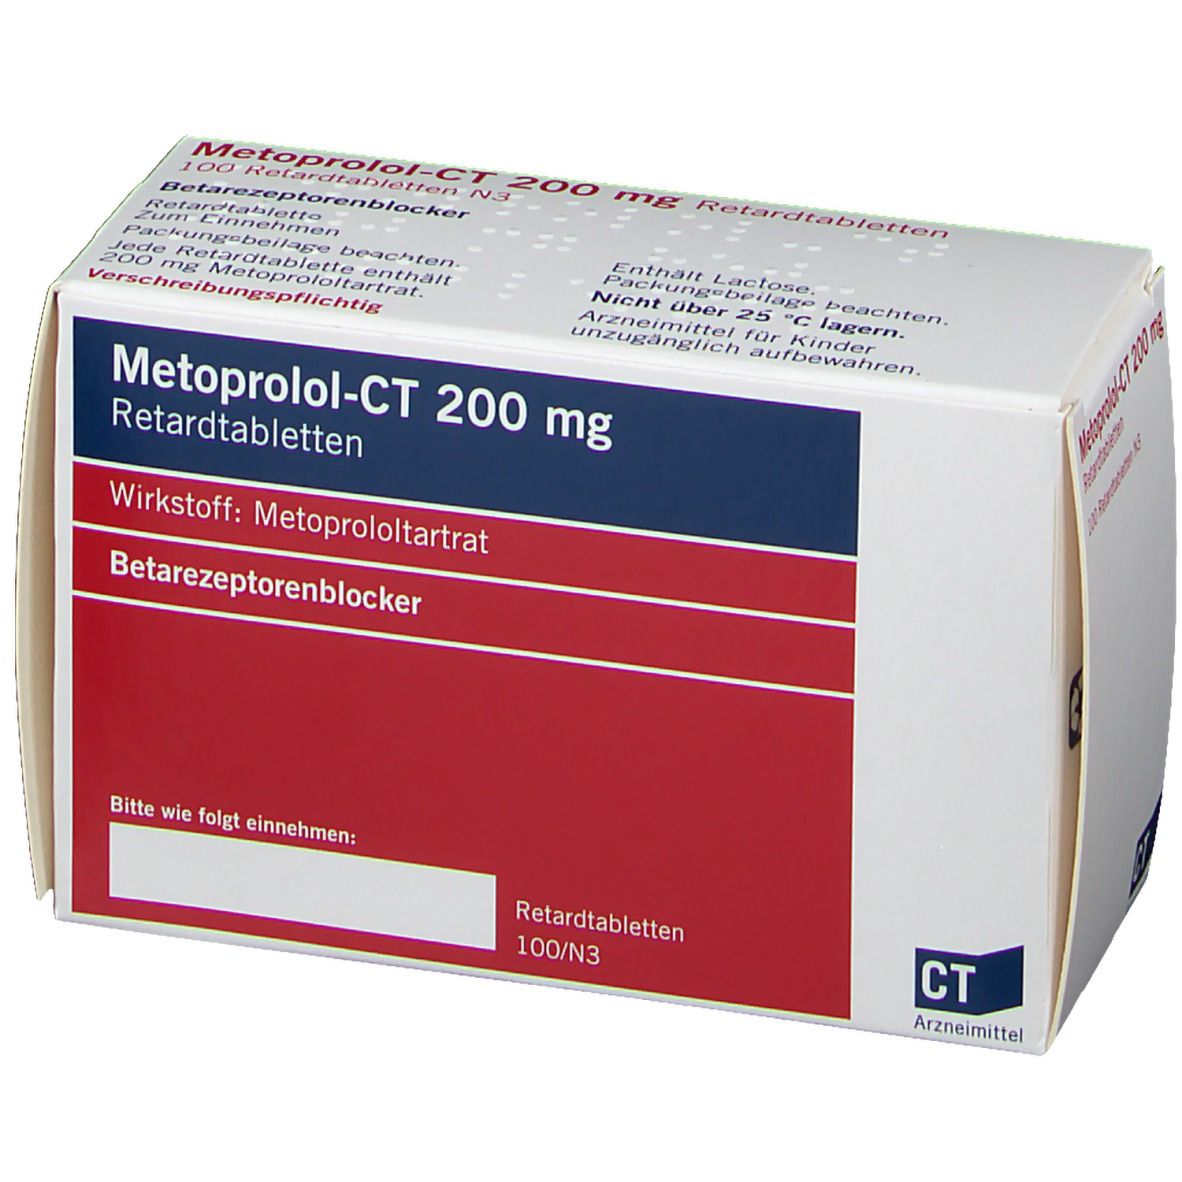 Metoprolol-CT 200 mg Retardtabletten